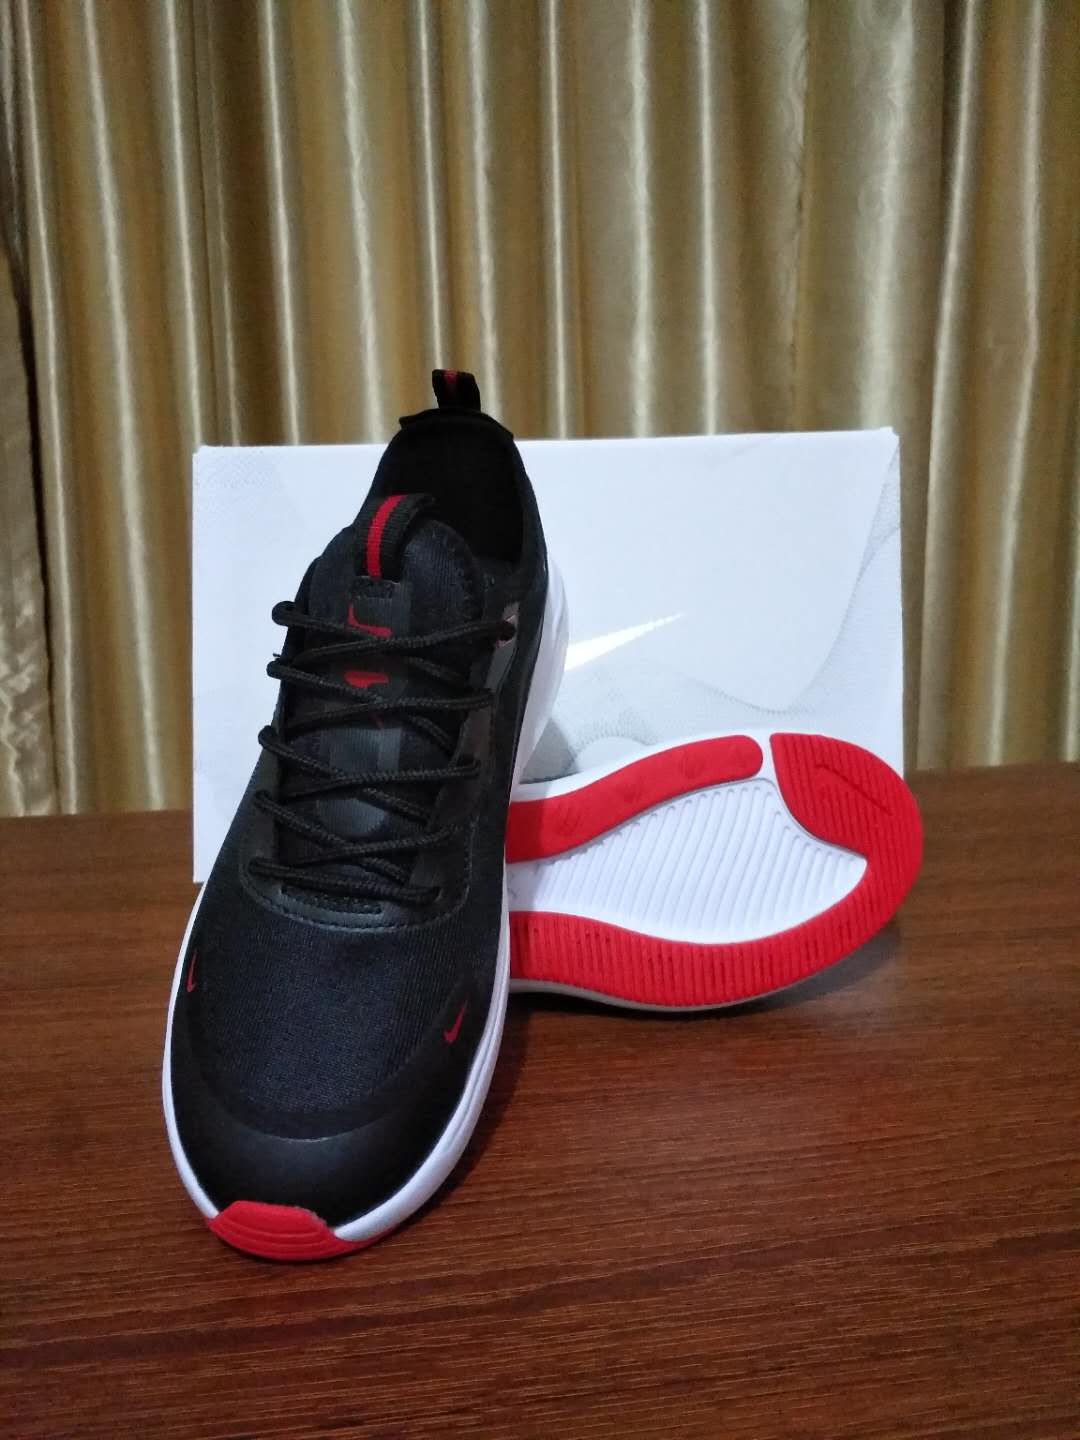 2020 Nike Air Max Dia Black Red White For Women